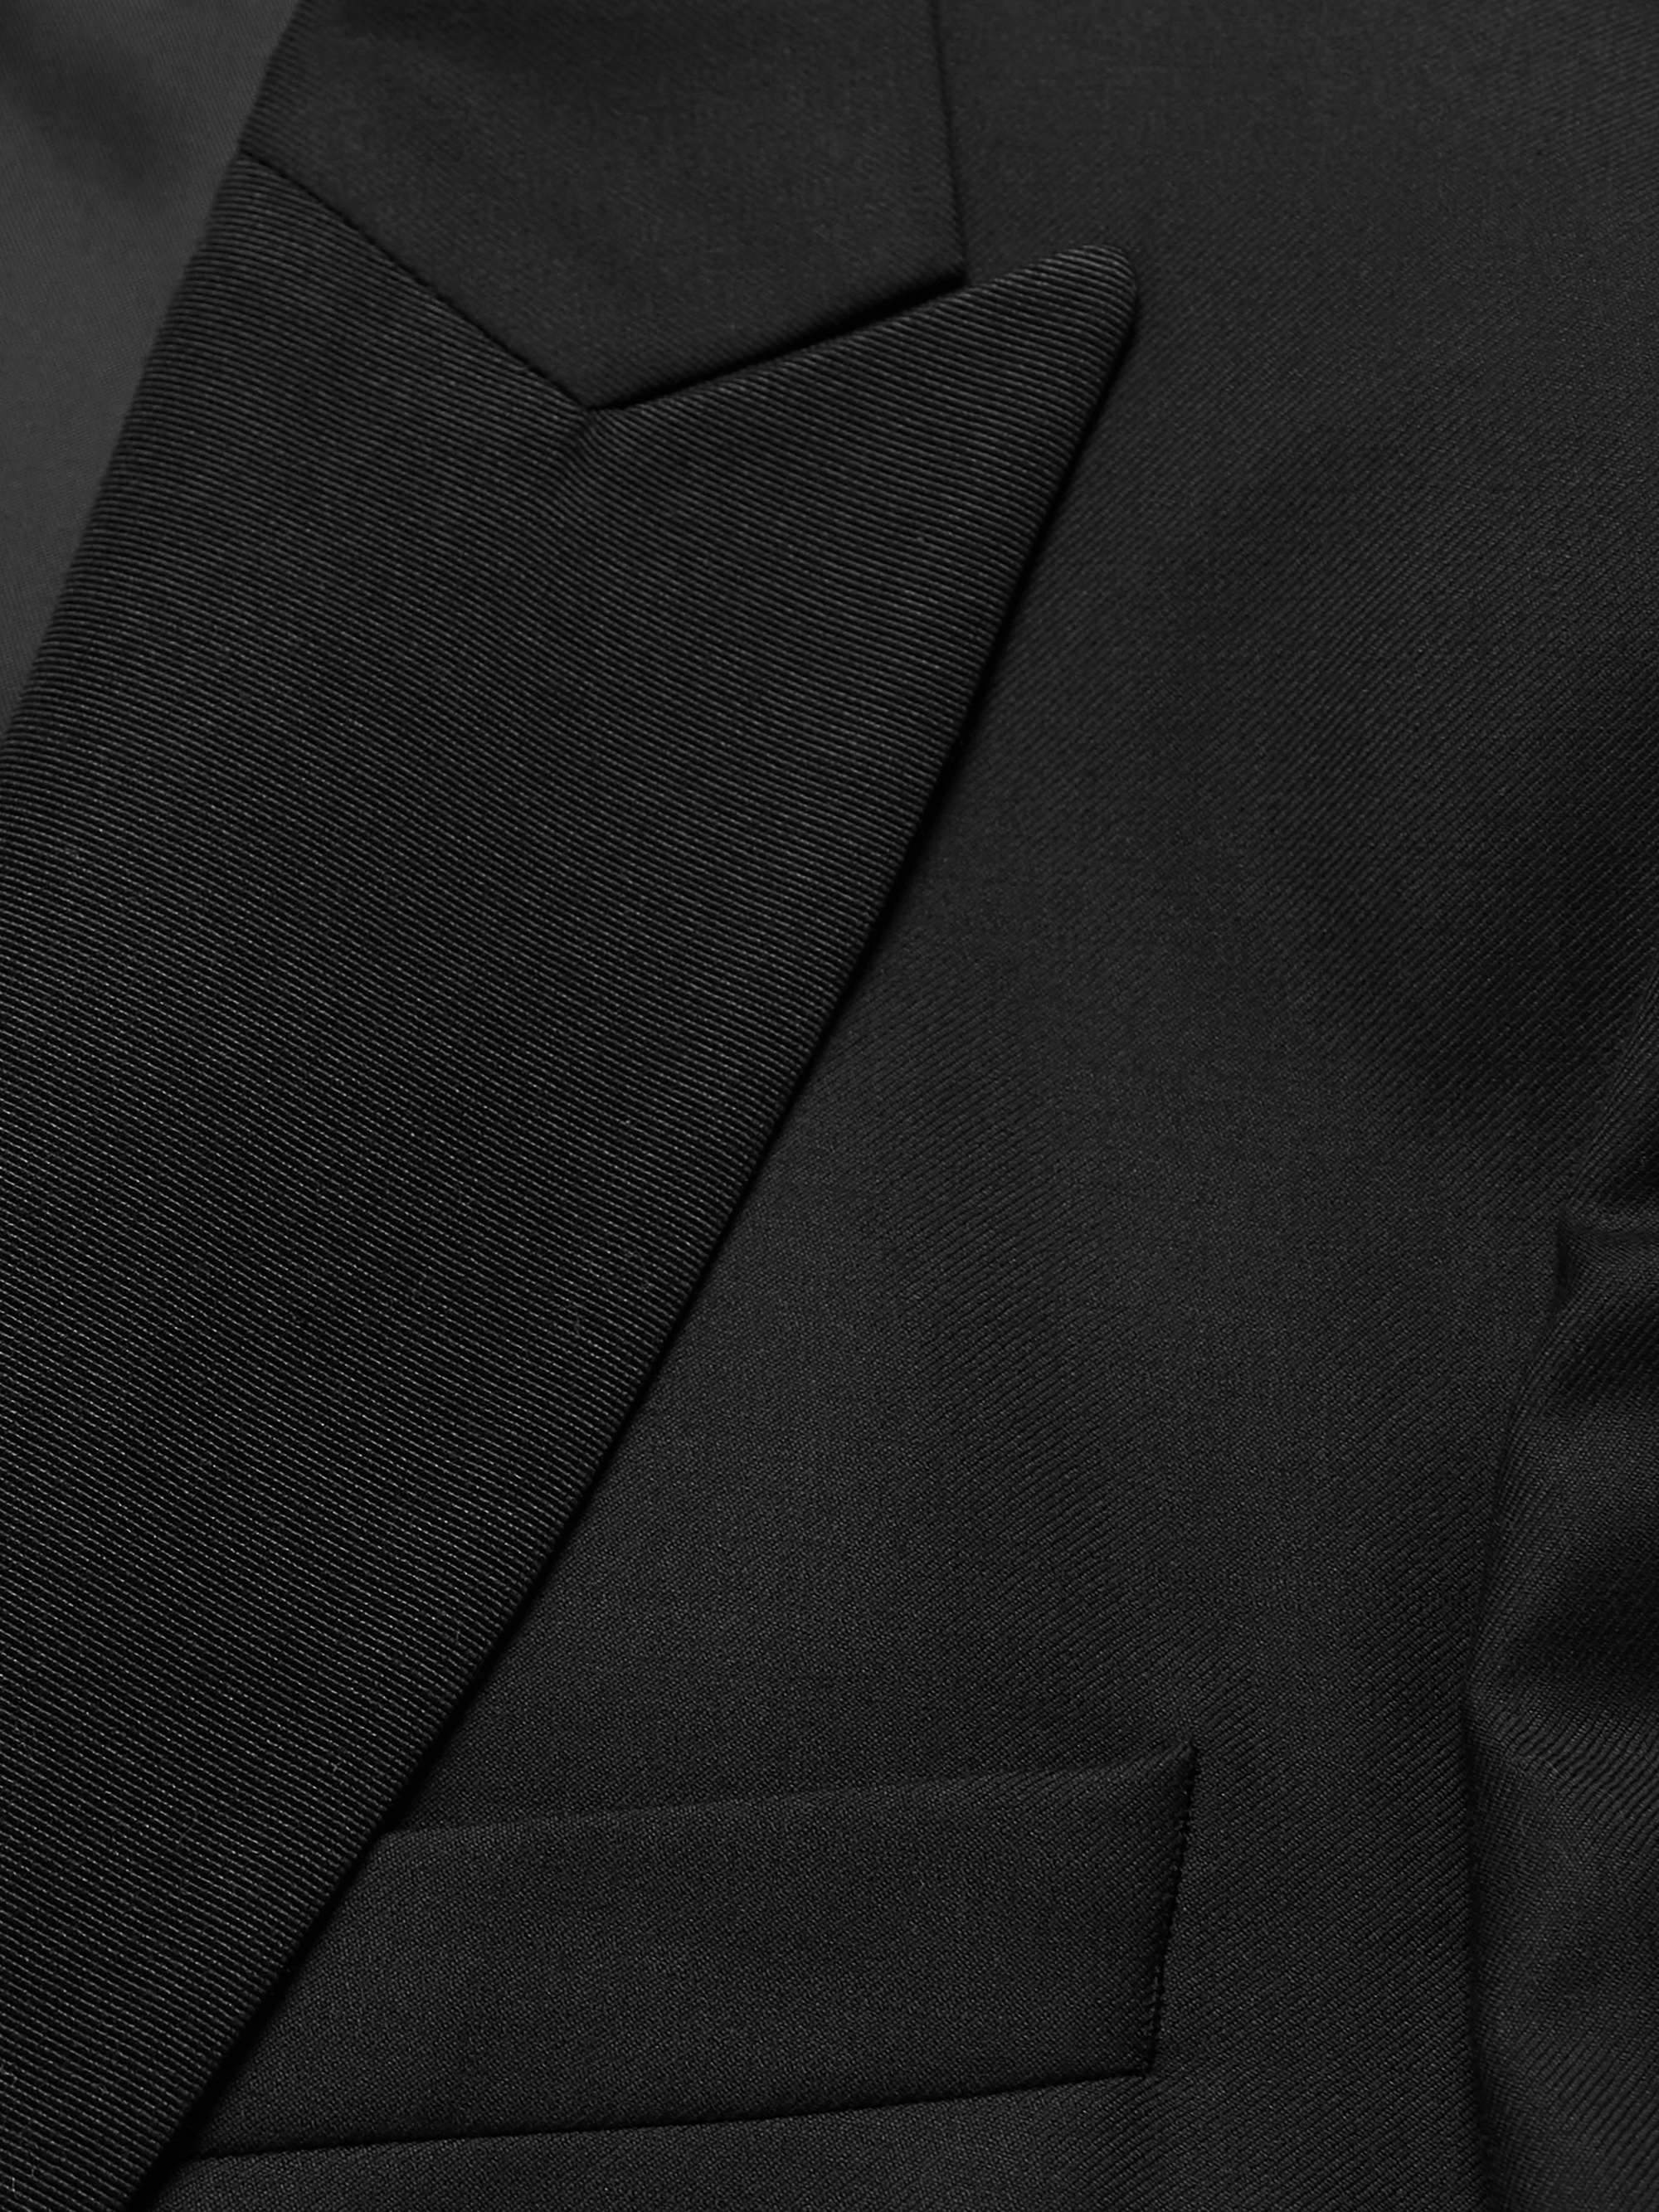 MR P. Wool Tuxedo Jacket